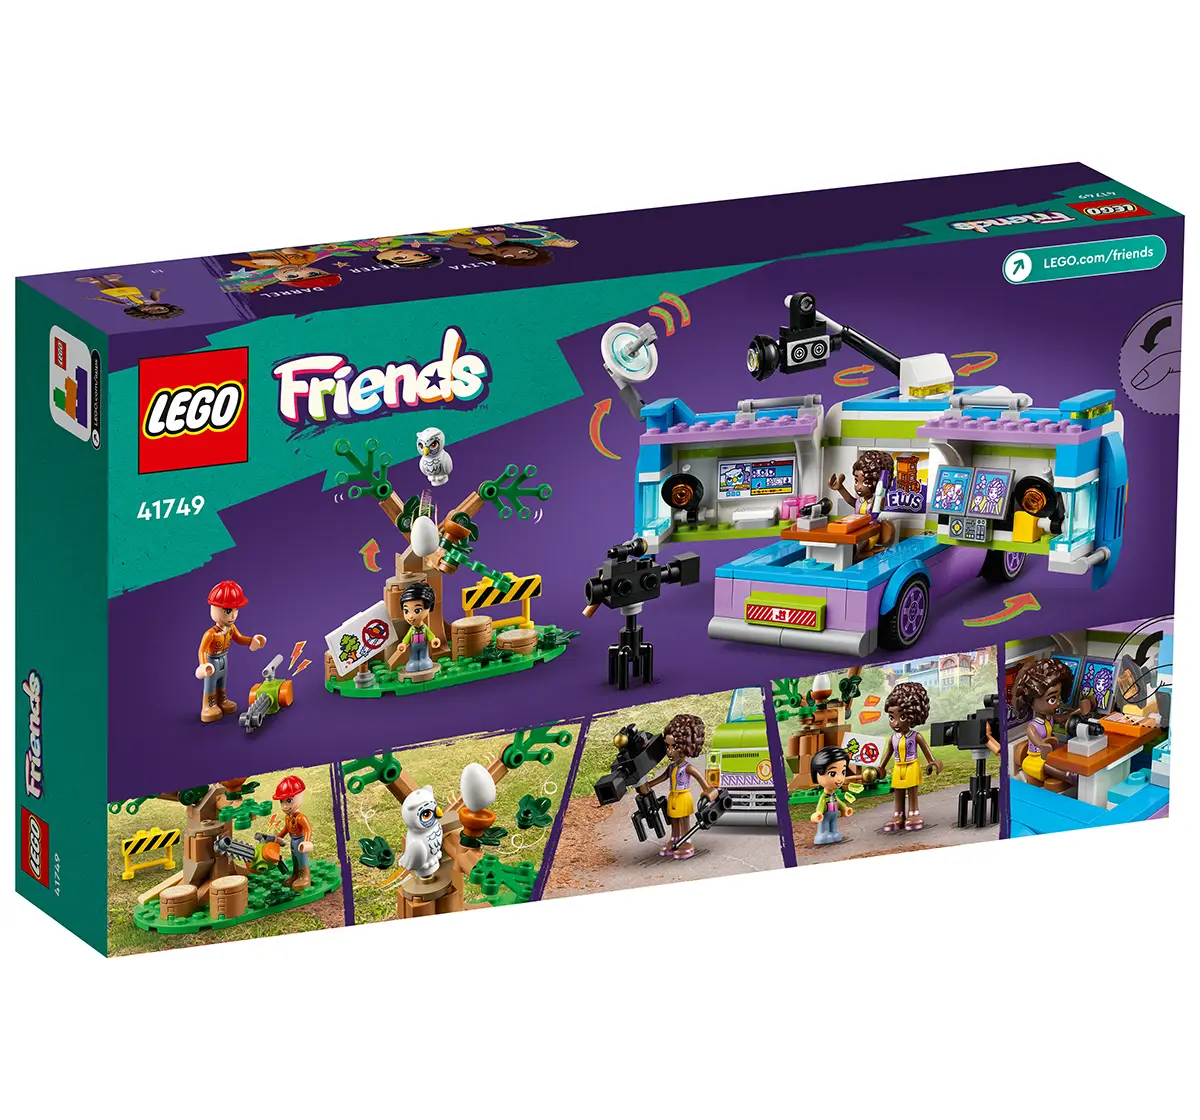 Lego Friends Newsroom Van 41749 Building Toy Set (446 Pieces), 6Y+